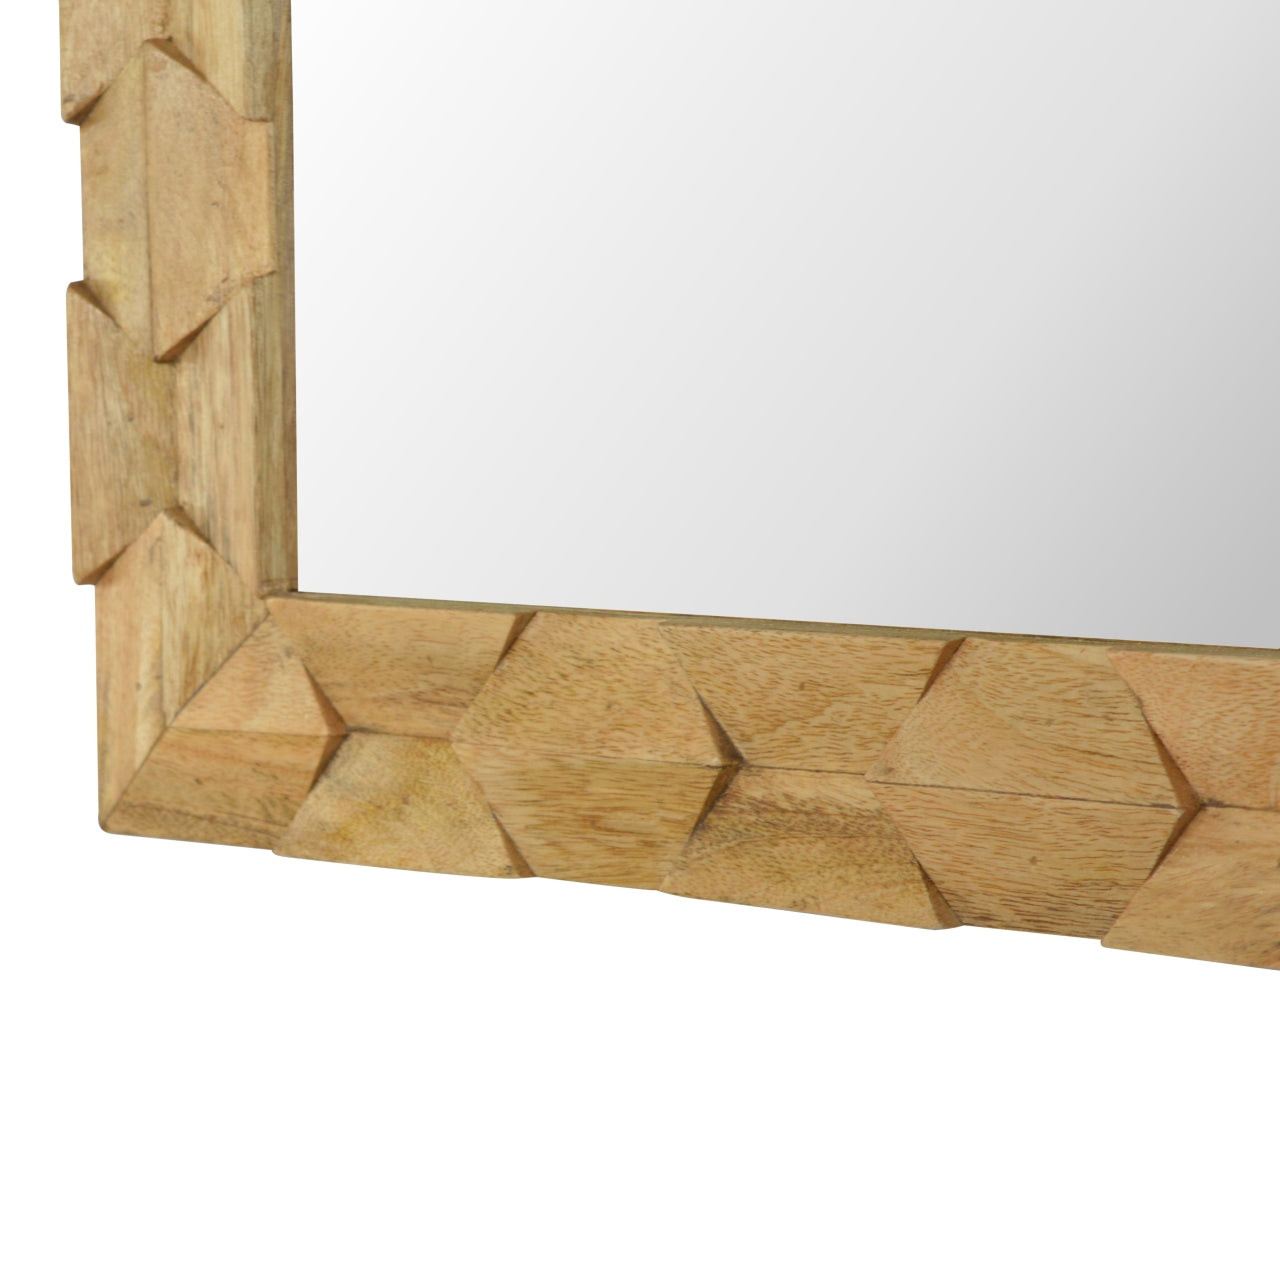 Mali Carved Square Mirror - Broxle